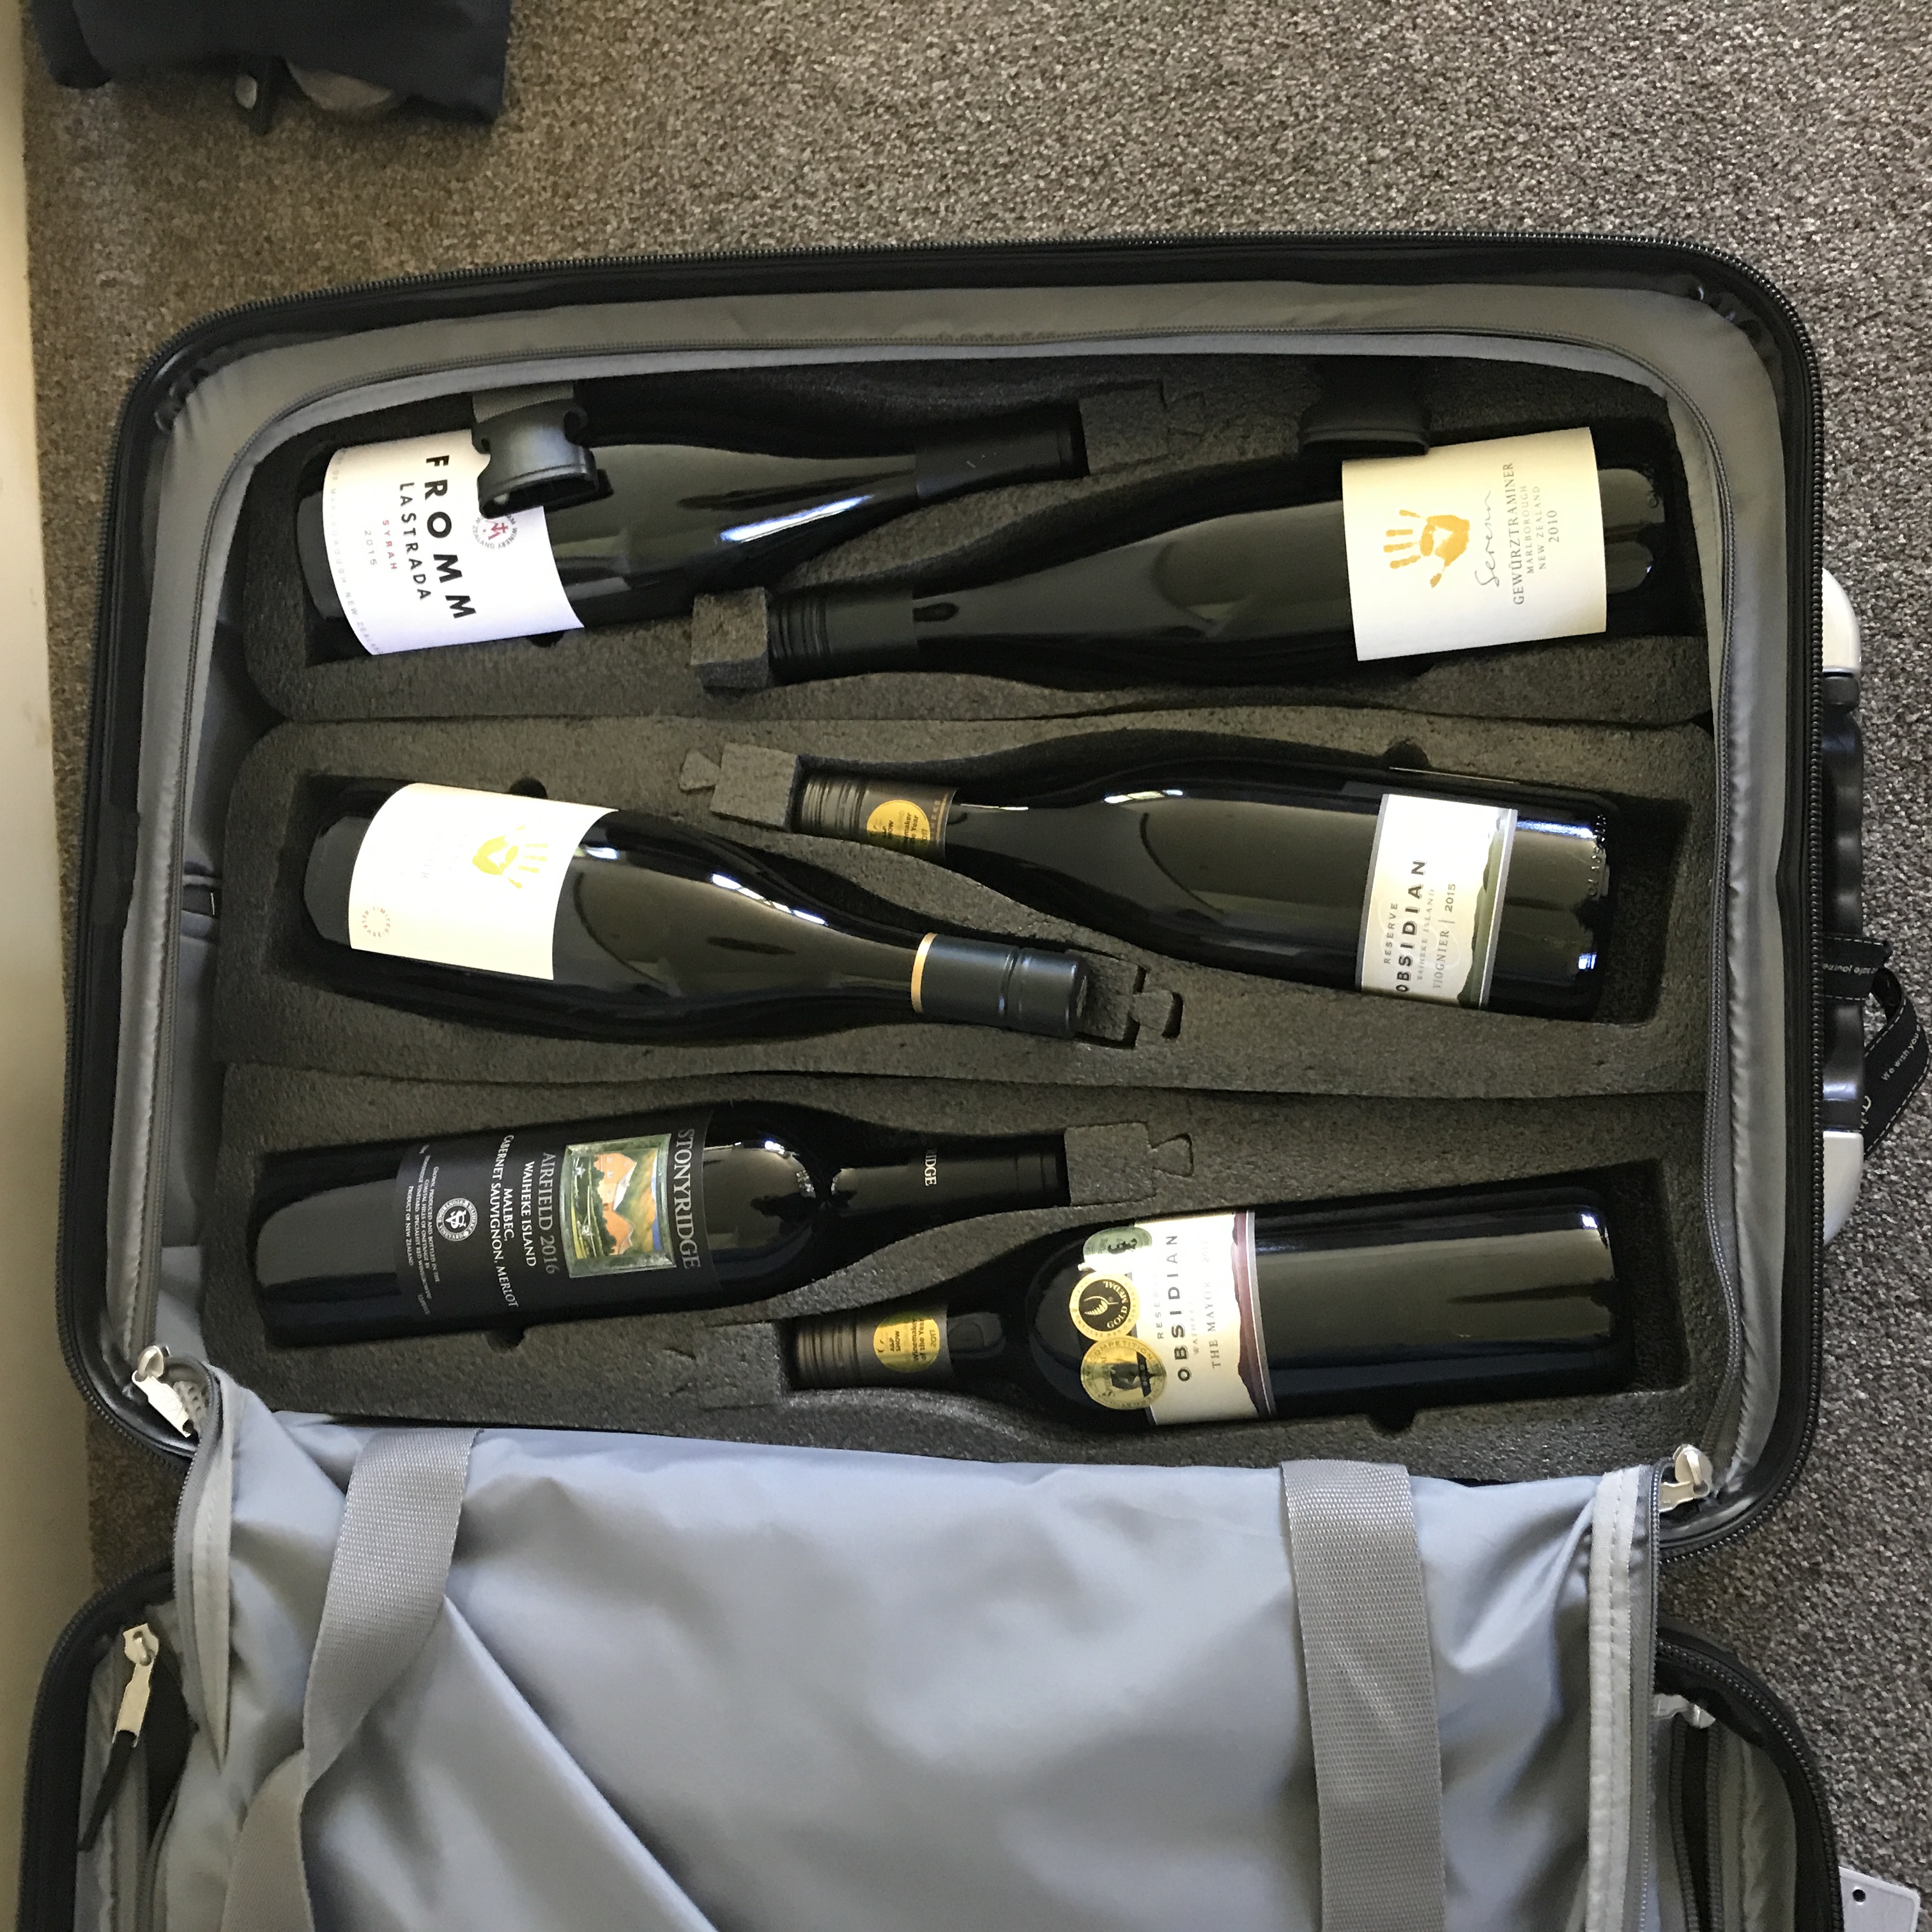 VinGardeValise wine suitcase review